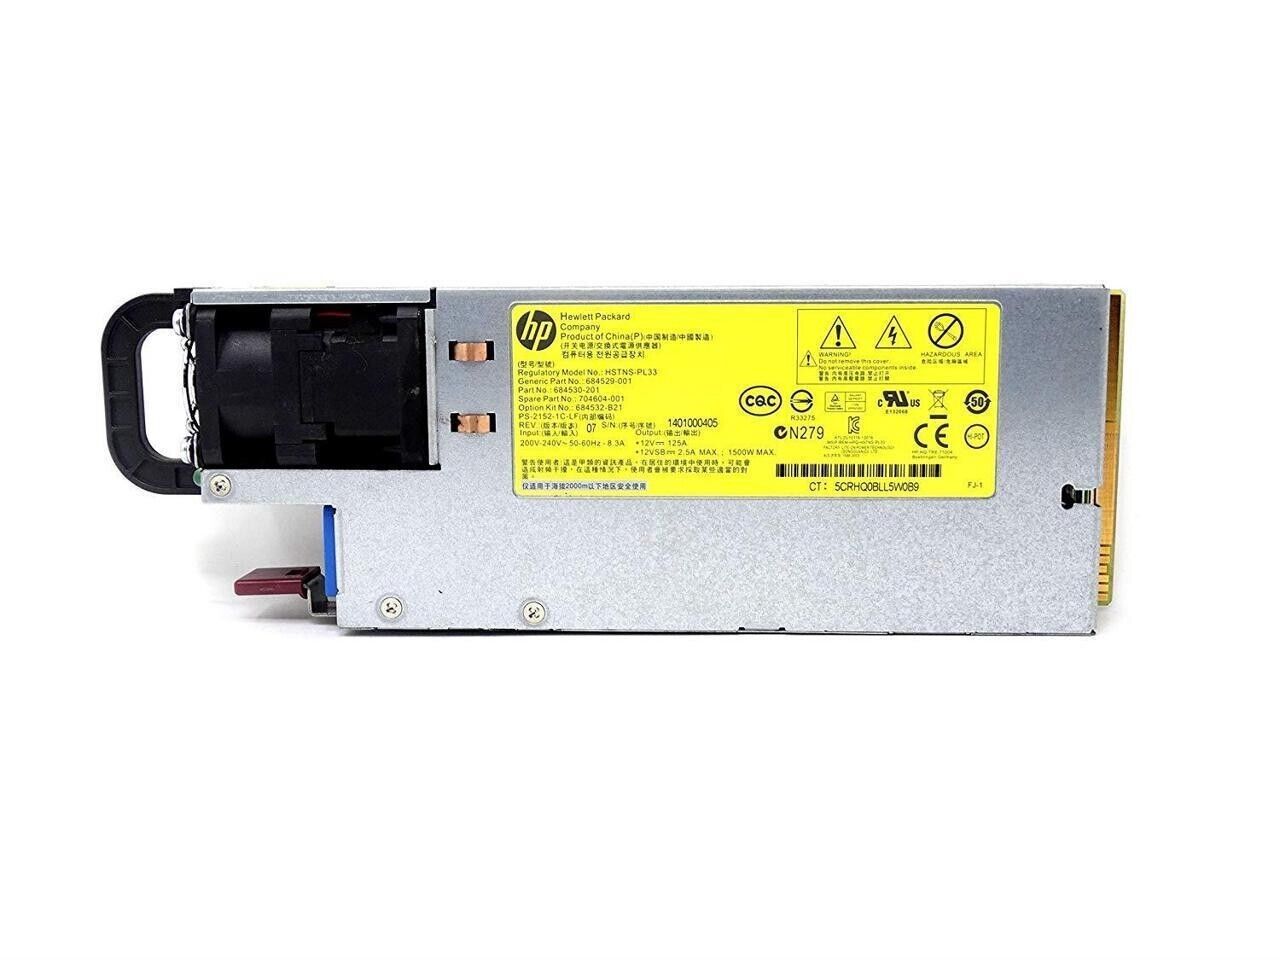 HP 684529-001 HSTNS-PL33 CS Platinum Plus Hot Plug 1500W Power Supply